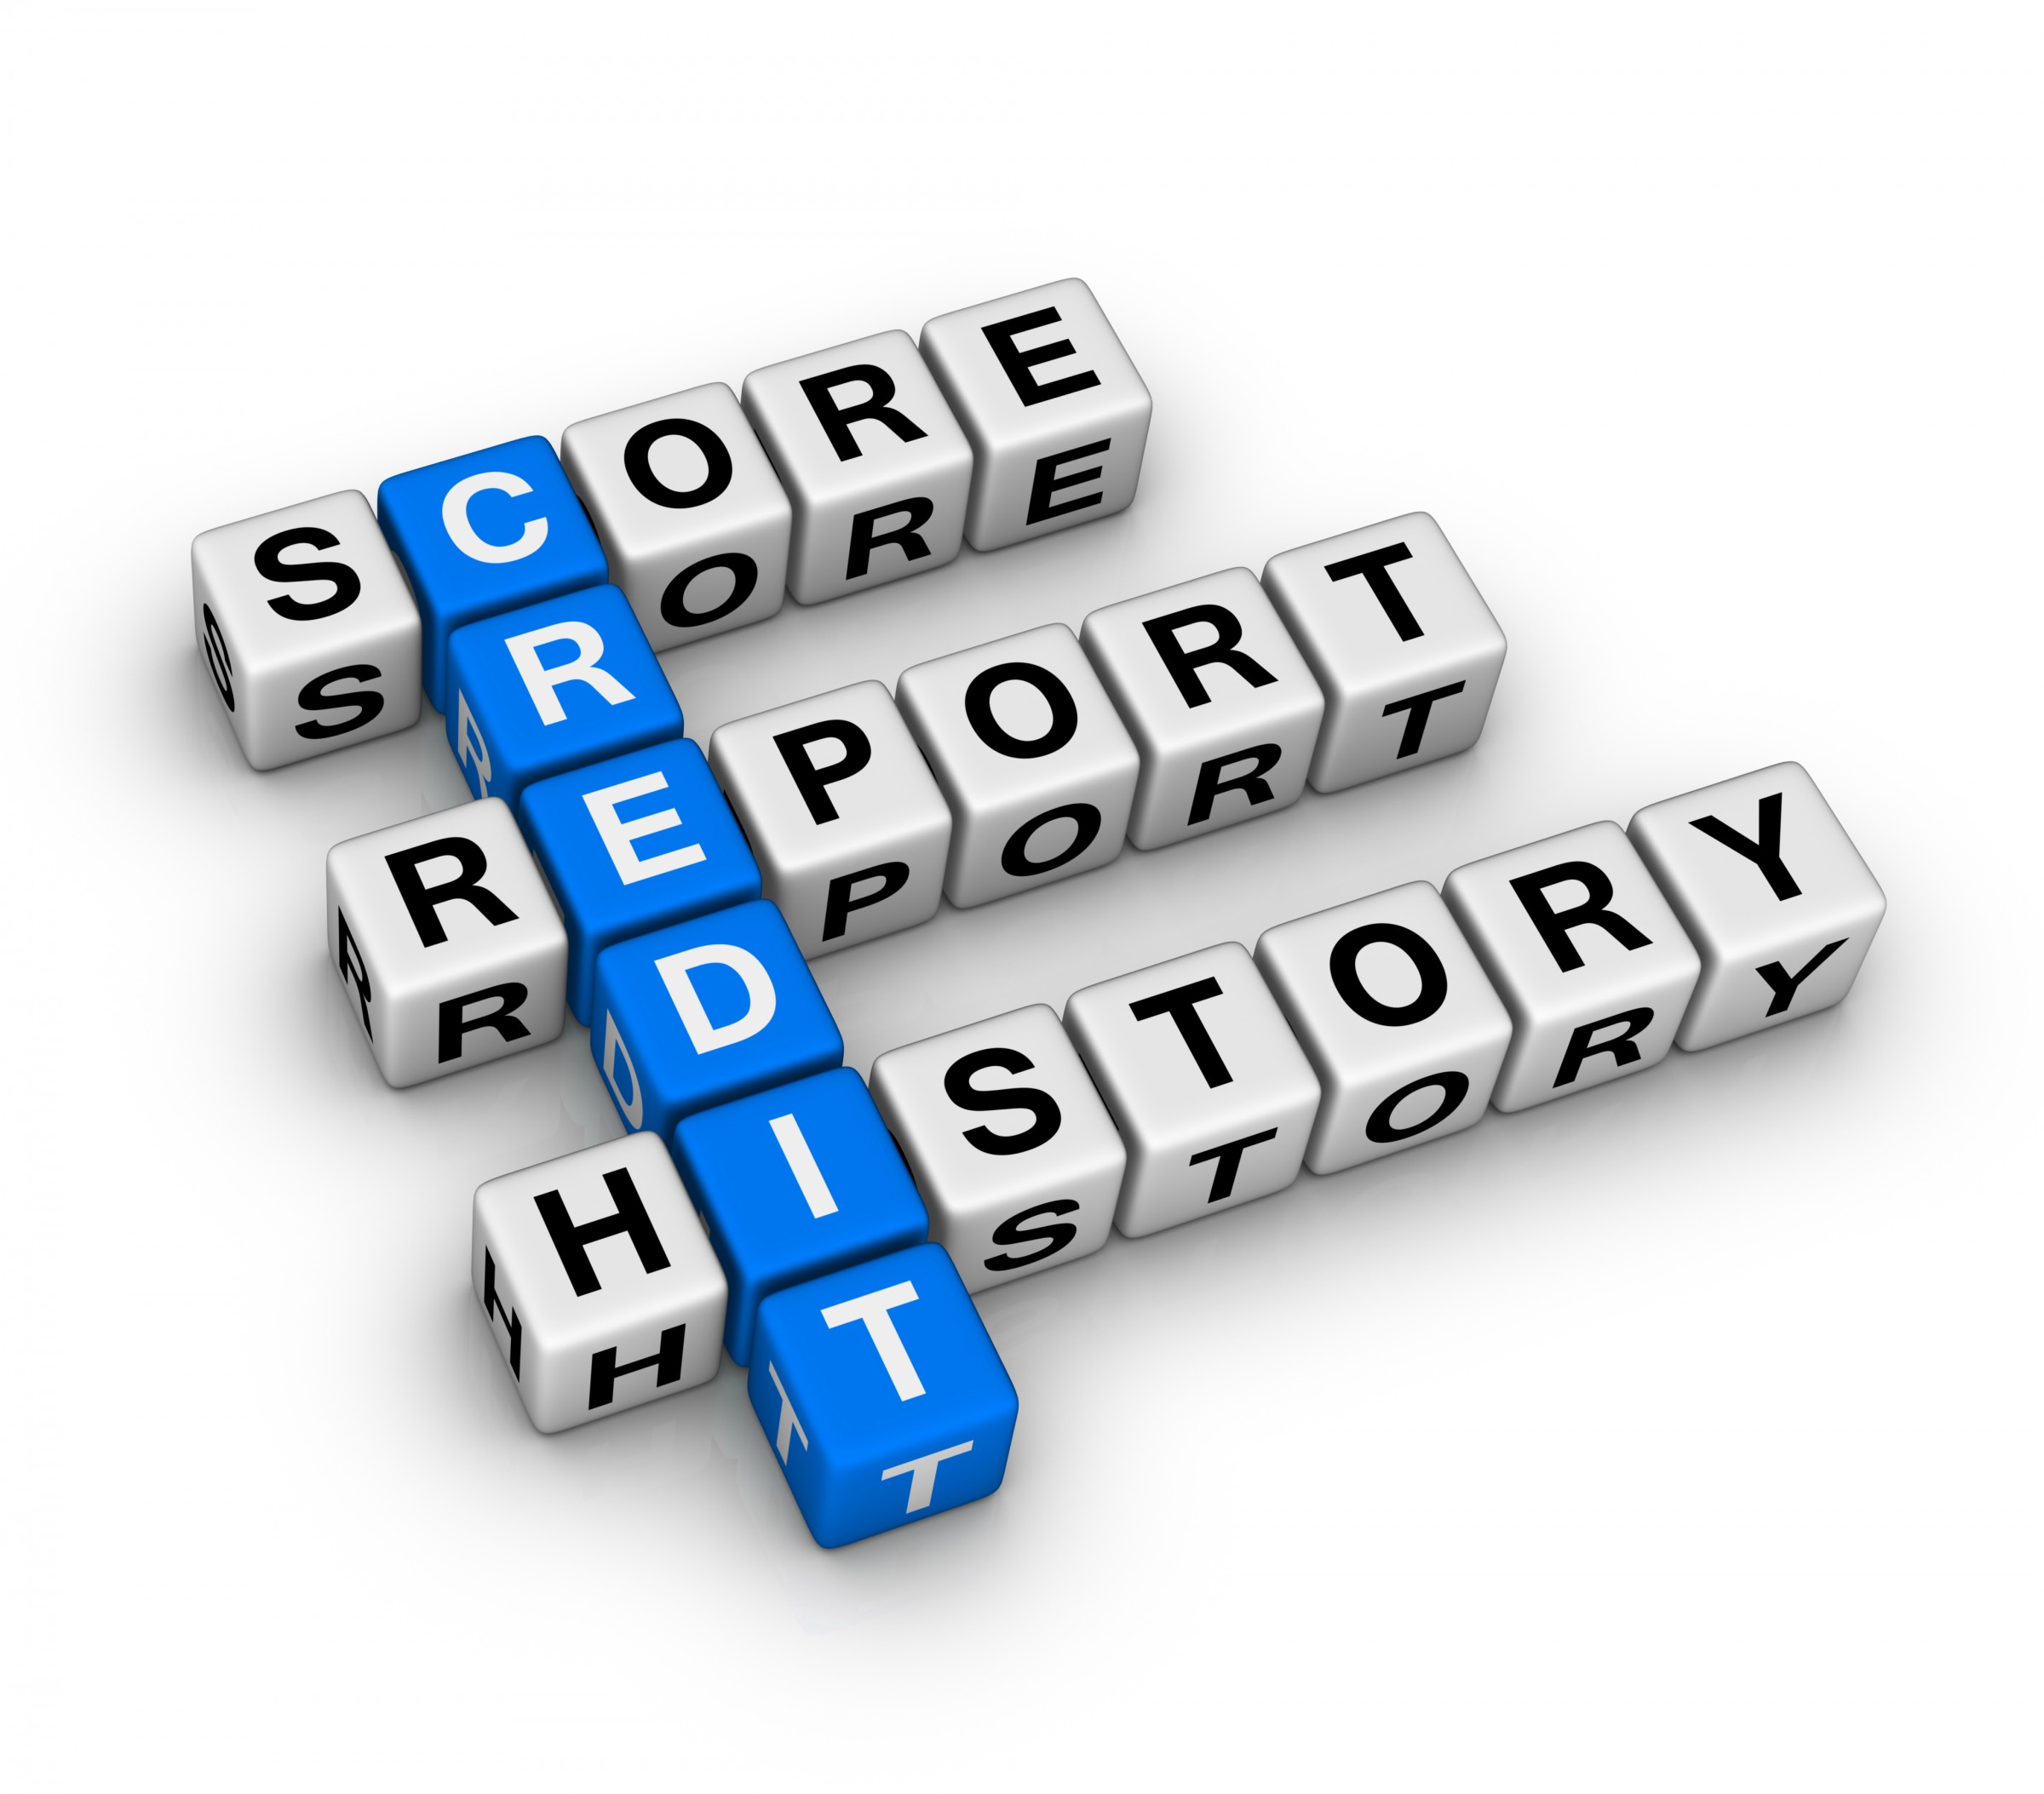 Credit rpeort history puzzle